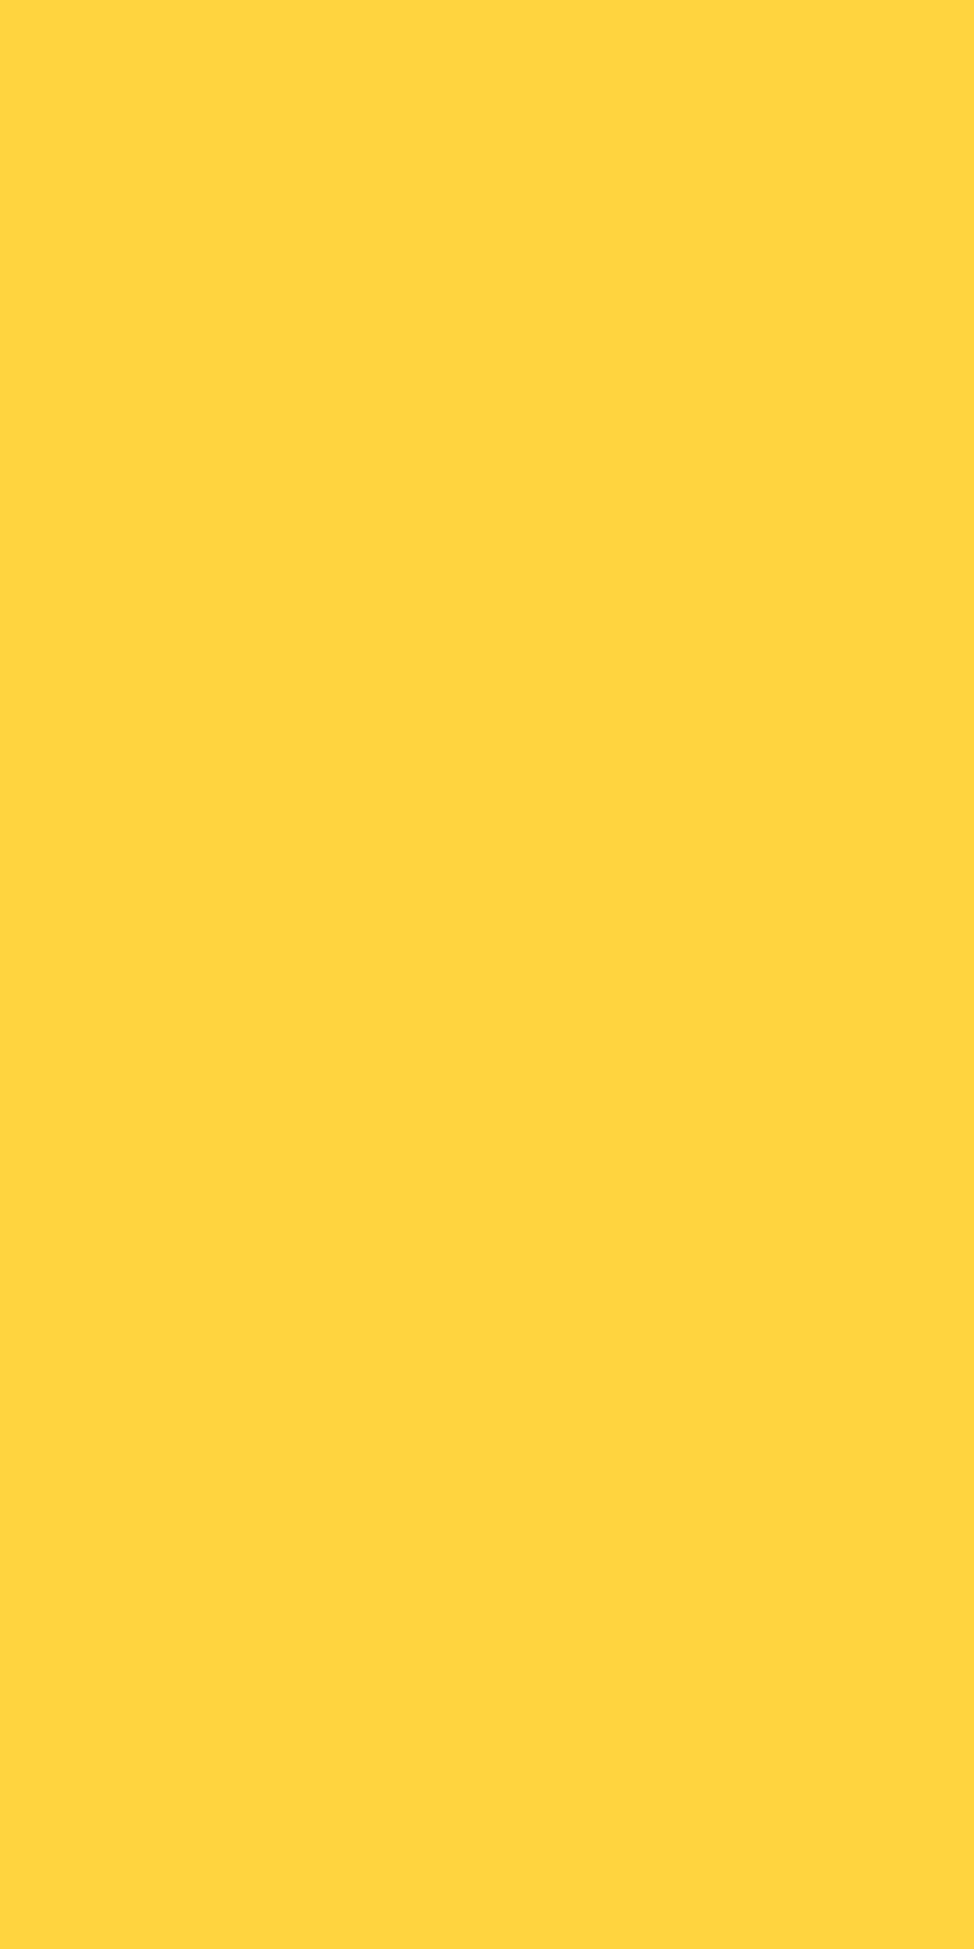 Zelltuchservietten Spenderfalz, 33 x 32 cm, gelb